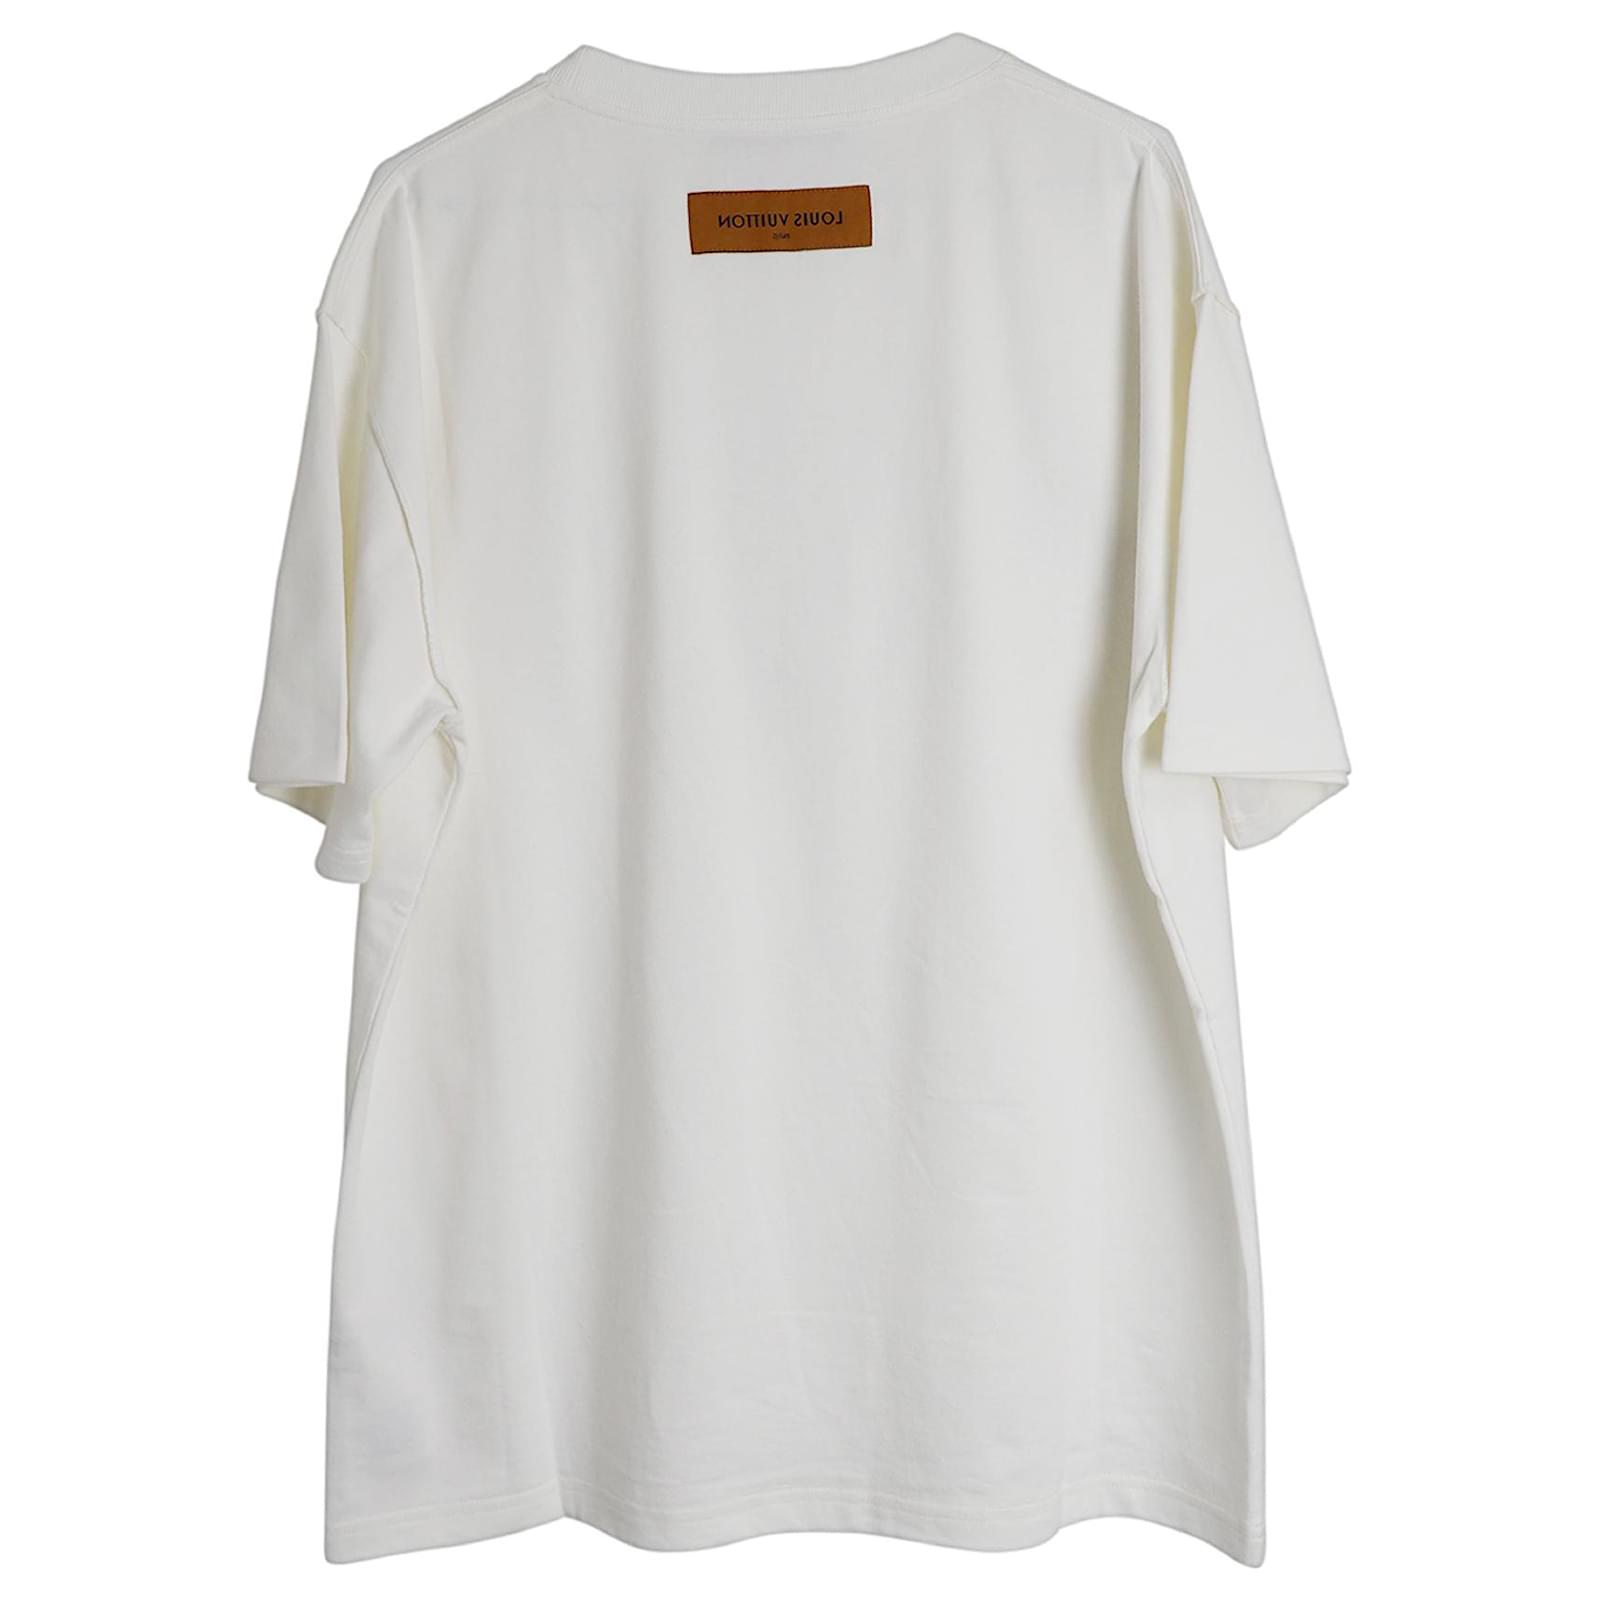 Twist Louis Vuitton 3D LV Graffiti Embroidered T-Shirt in White